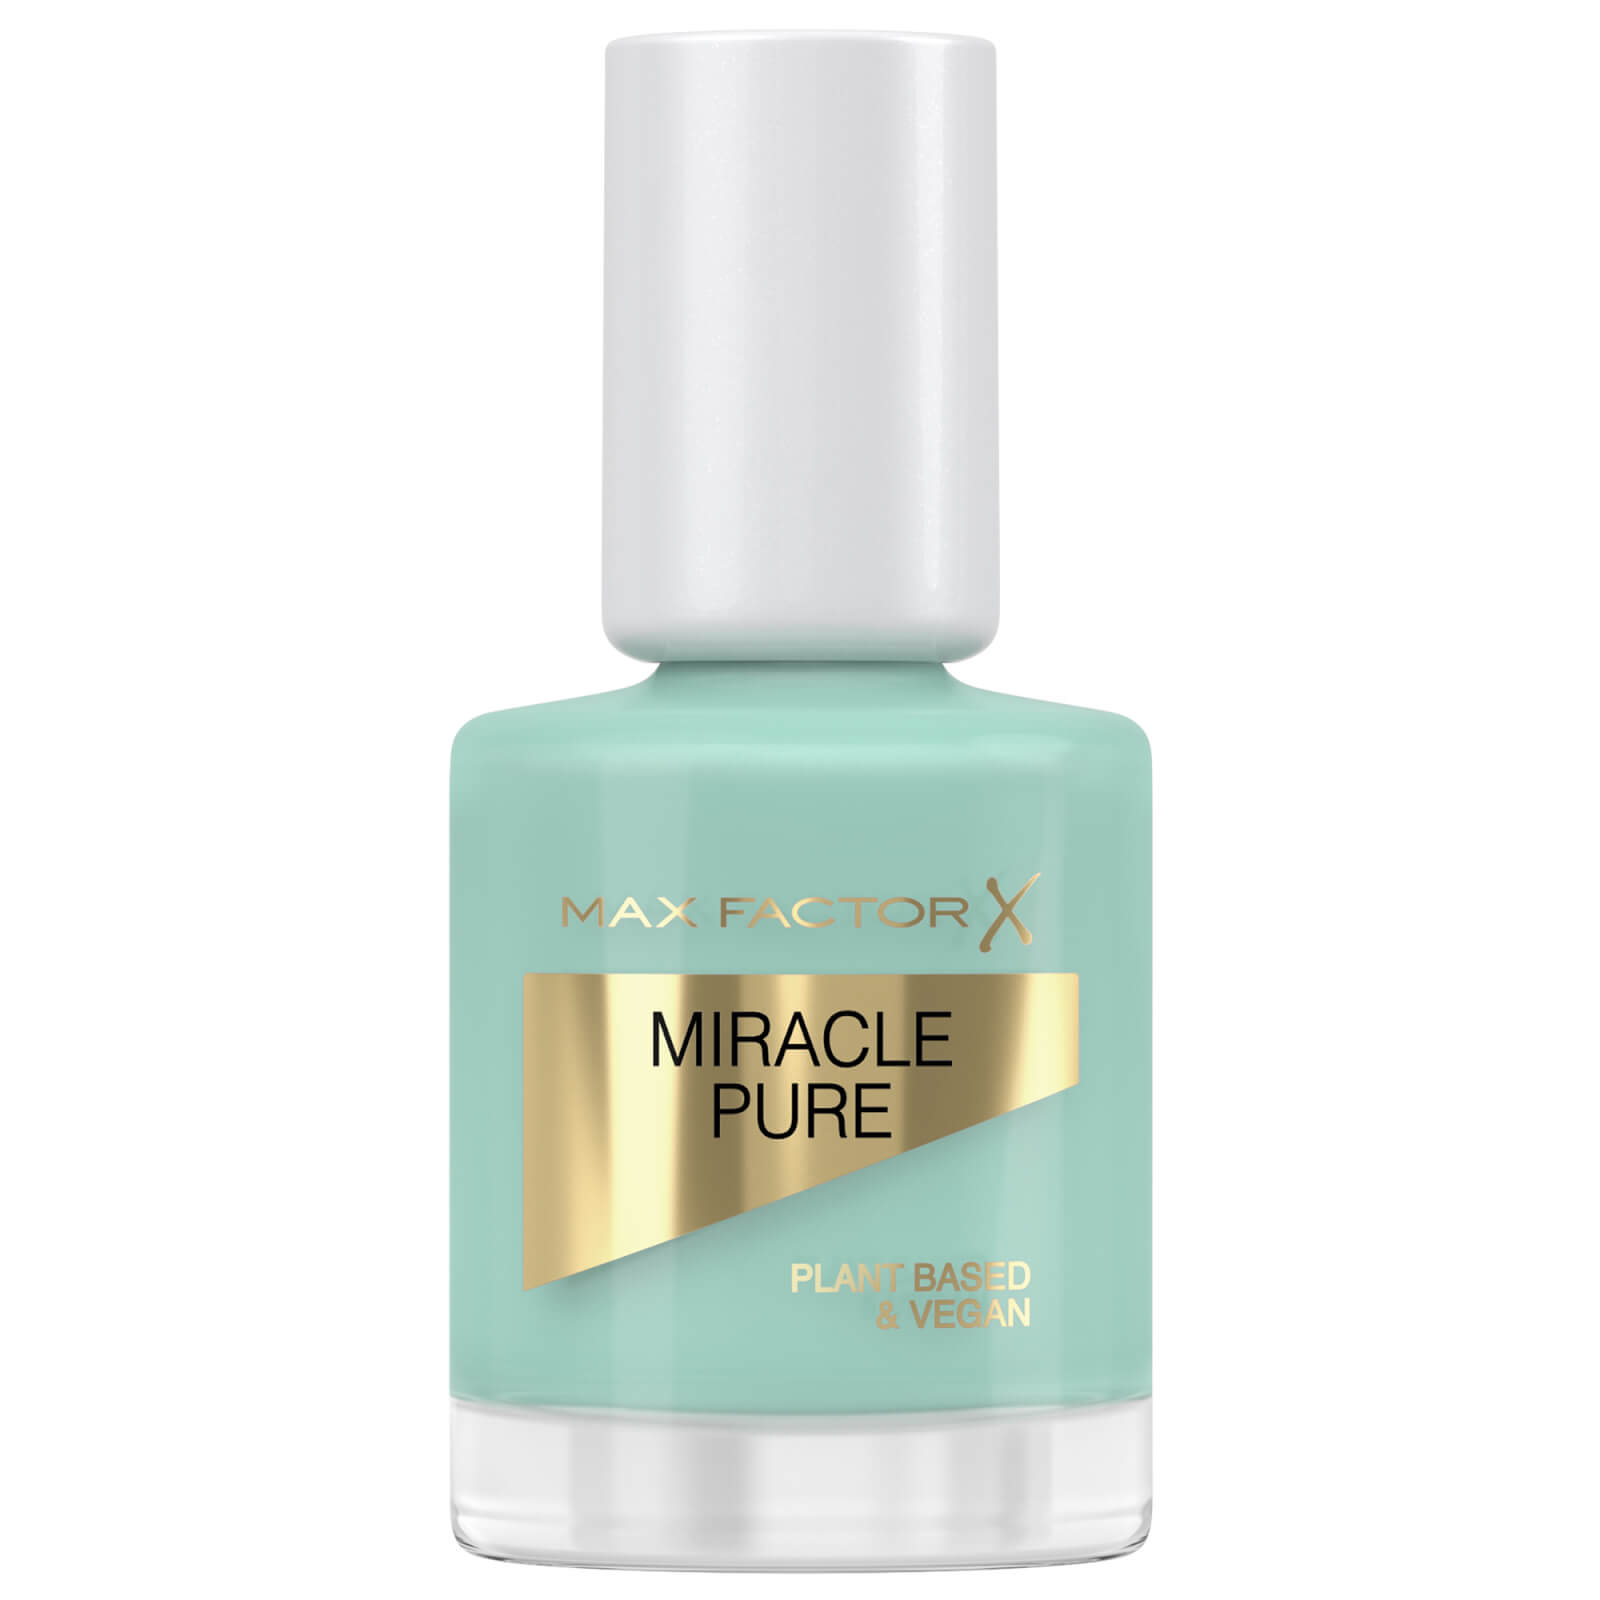 max factor miracle pure nagellack nr. 840-mondstein, 12 ml - one size blau